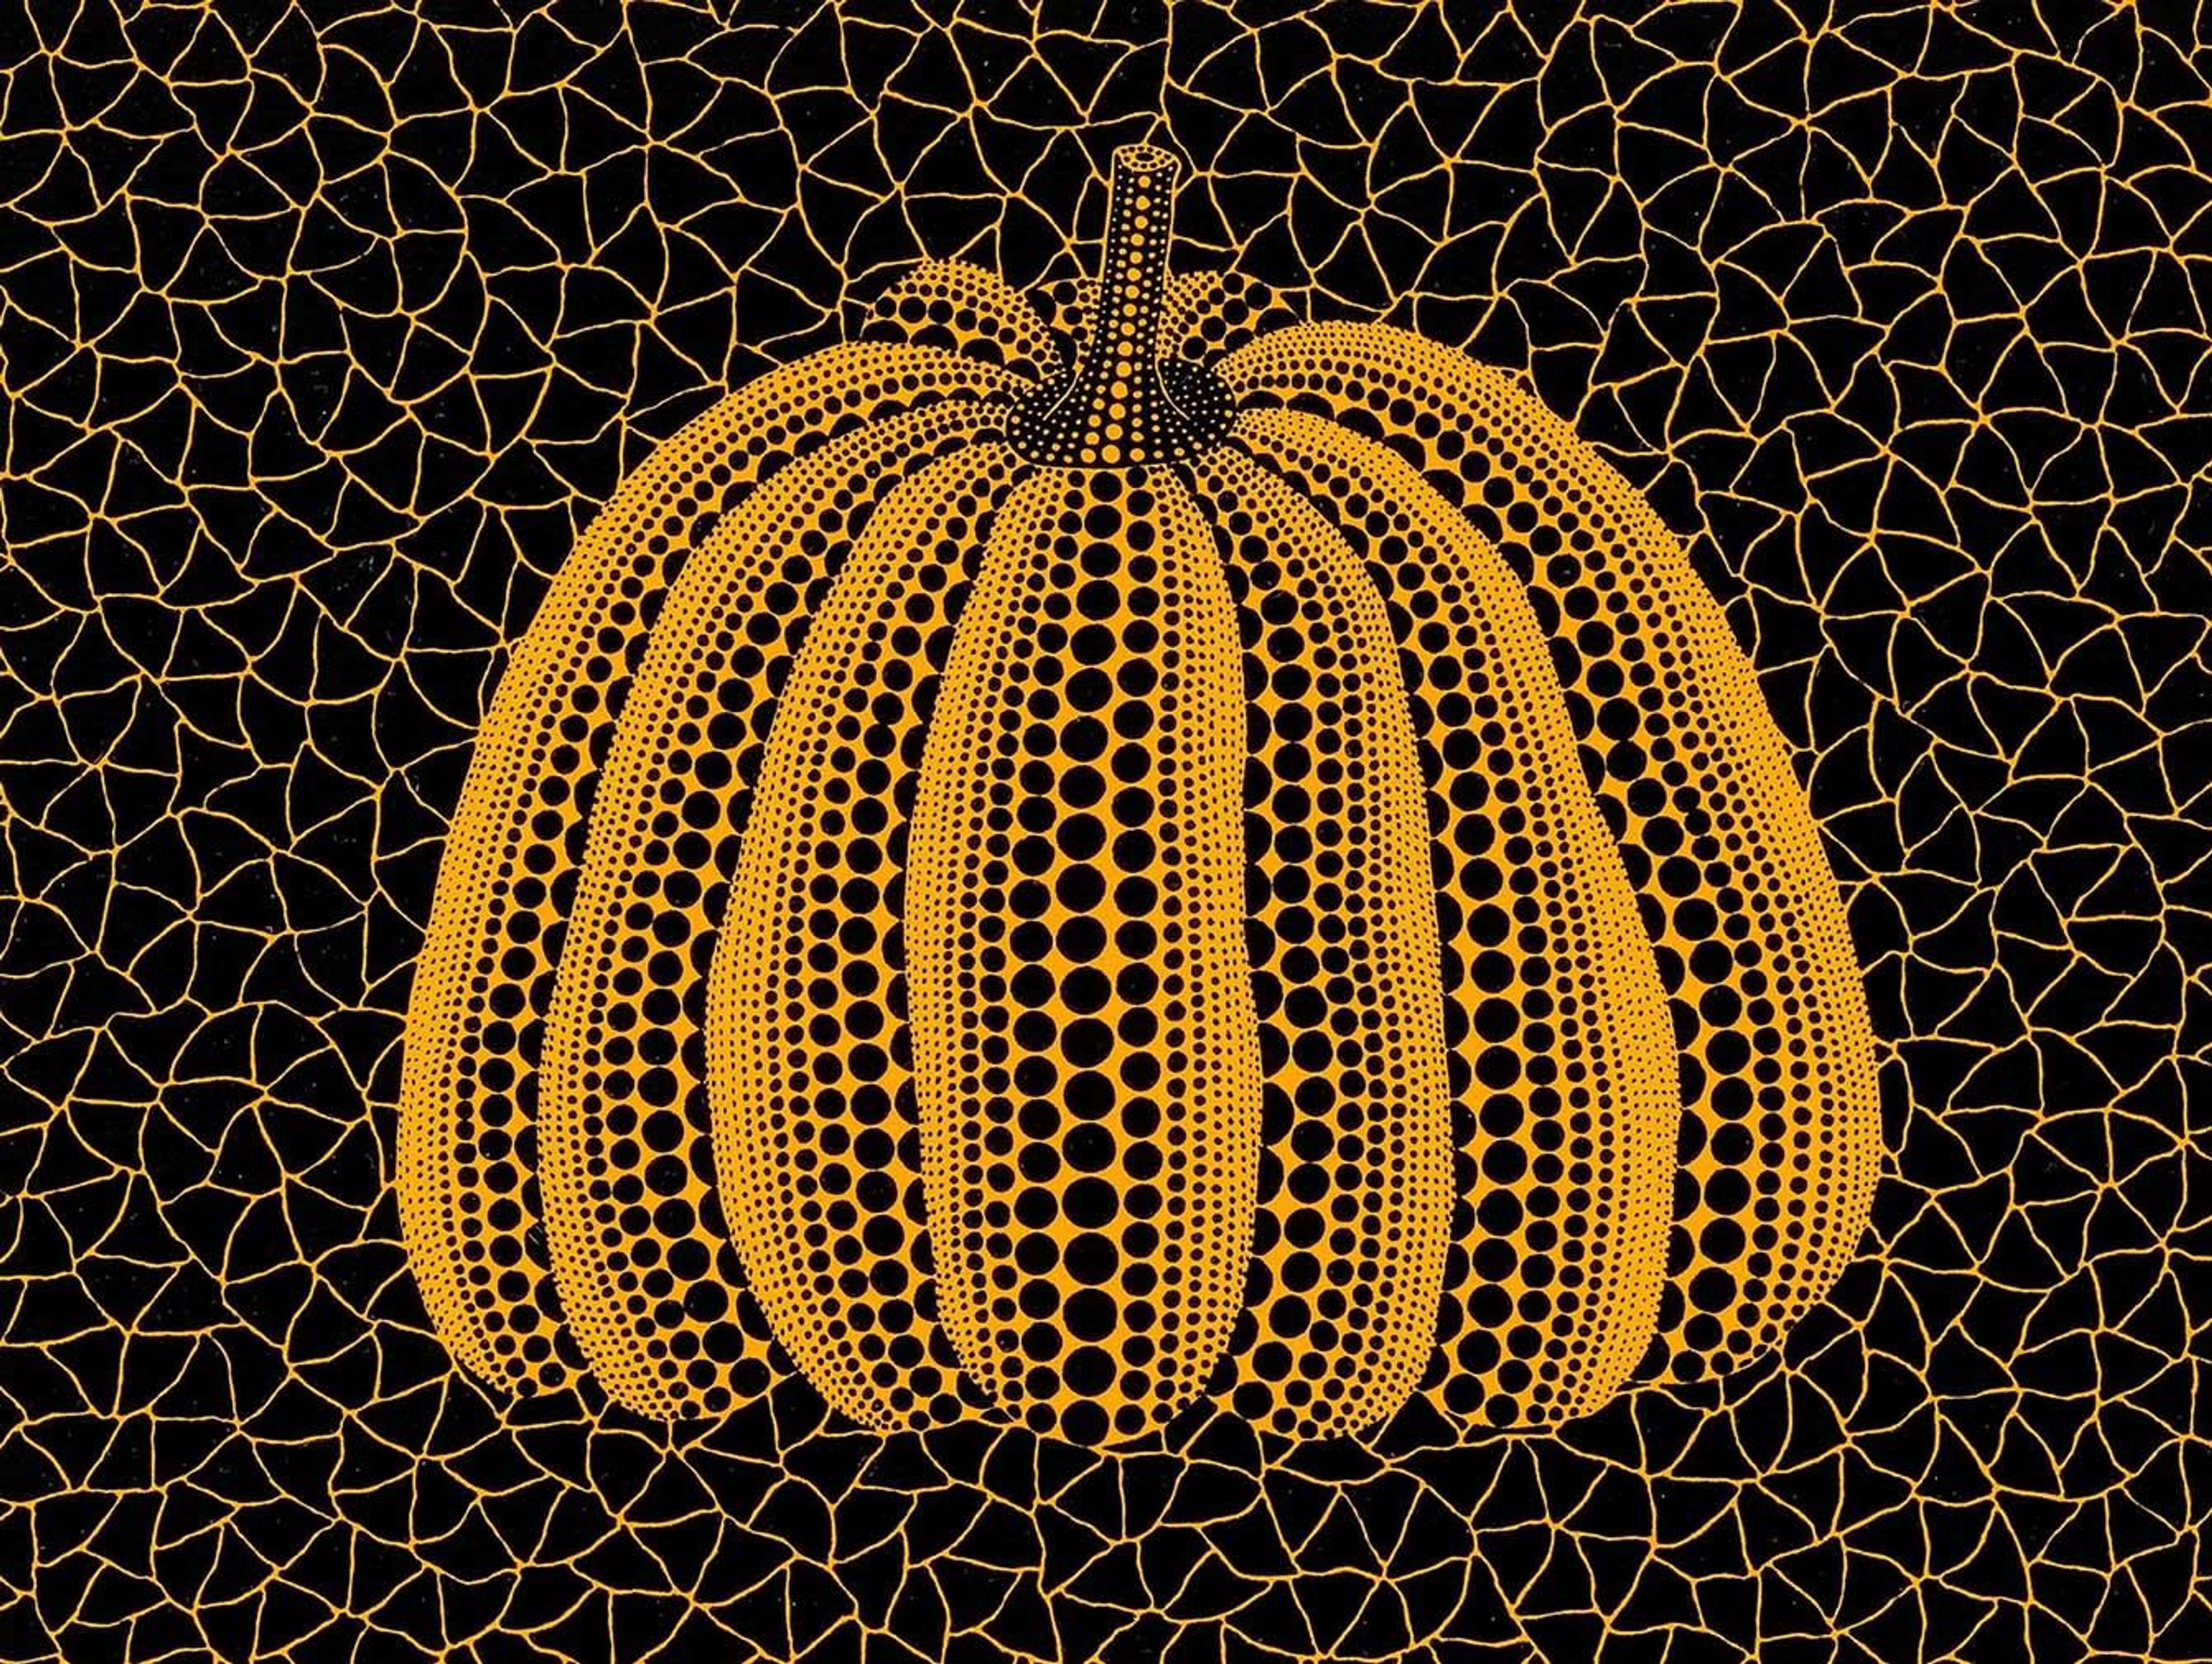 Yayoi Kusama's Pumpkin (YY) , Kusama 231. A screenprint of an orange pumpkin created out of a pattern of orange and black polka dots against a geometric patterned background